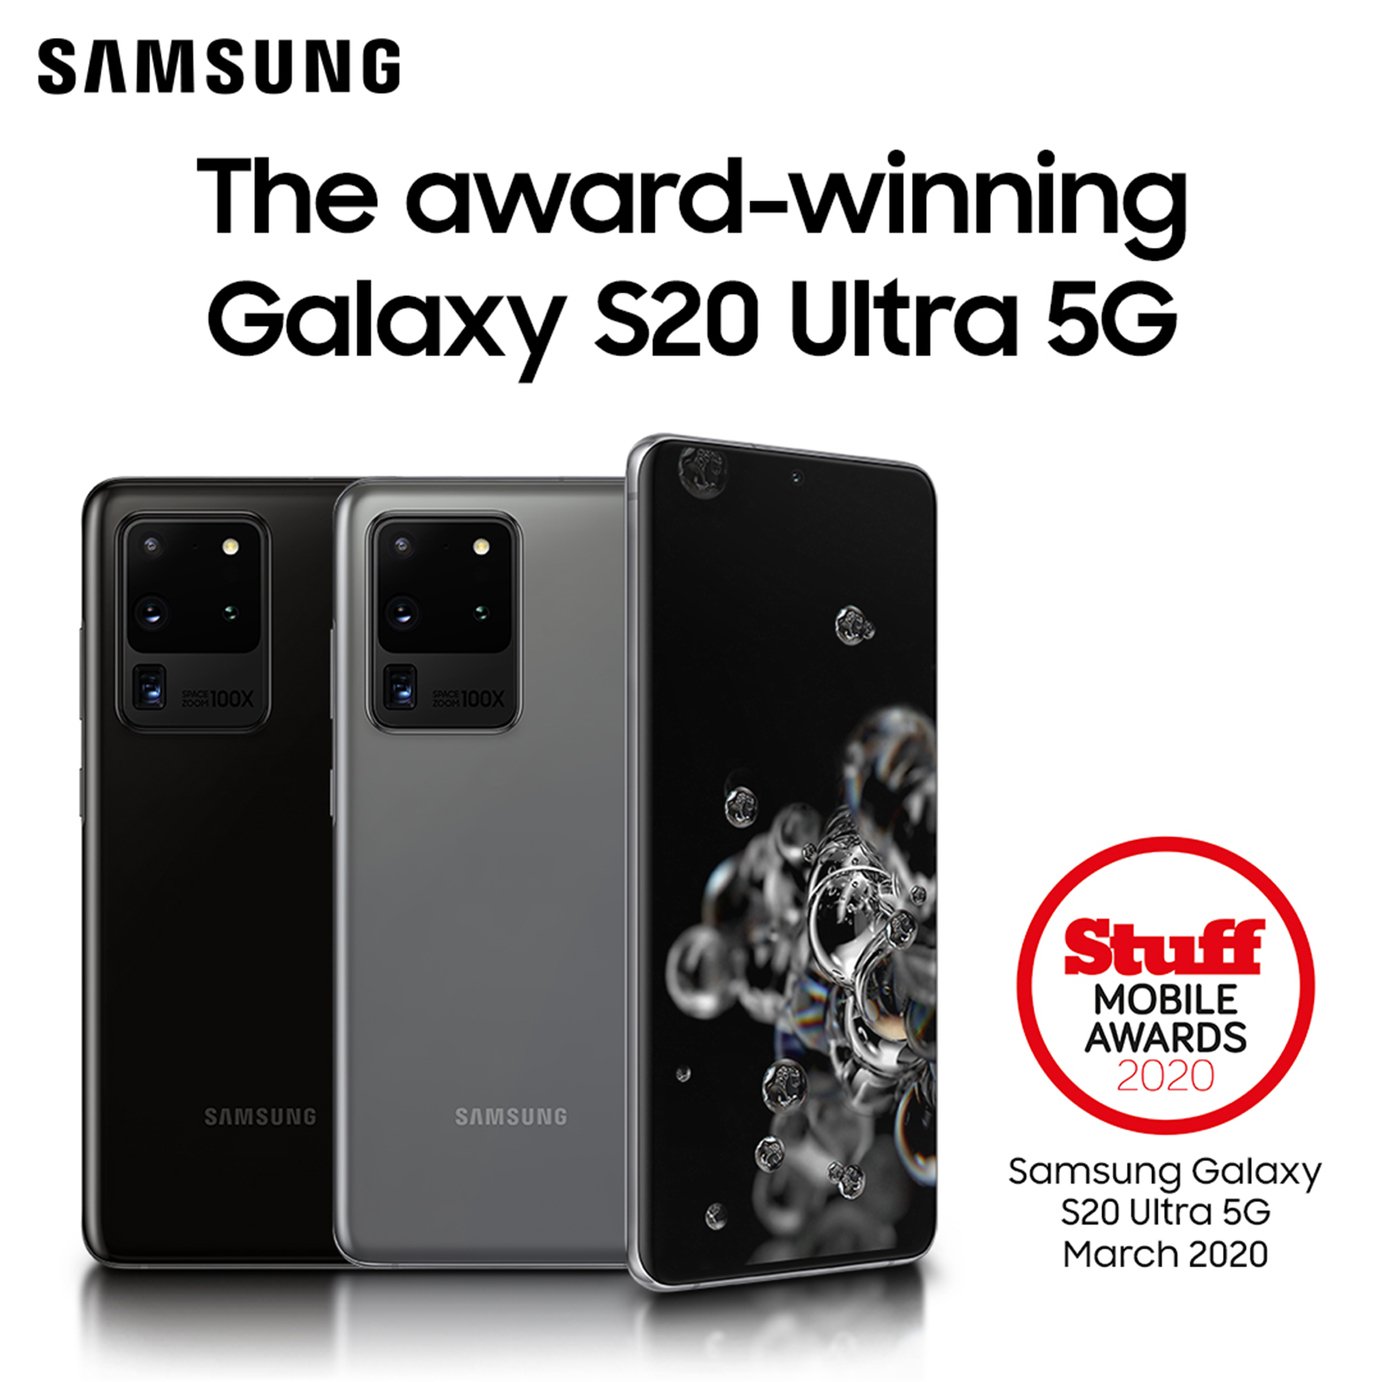 SIM Free Samsung Galaxy S20 Ultra 512GB 5G Mobile Phone-Grey Review